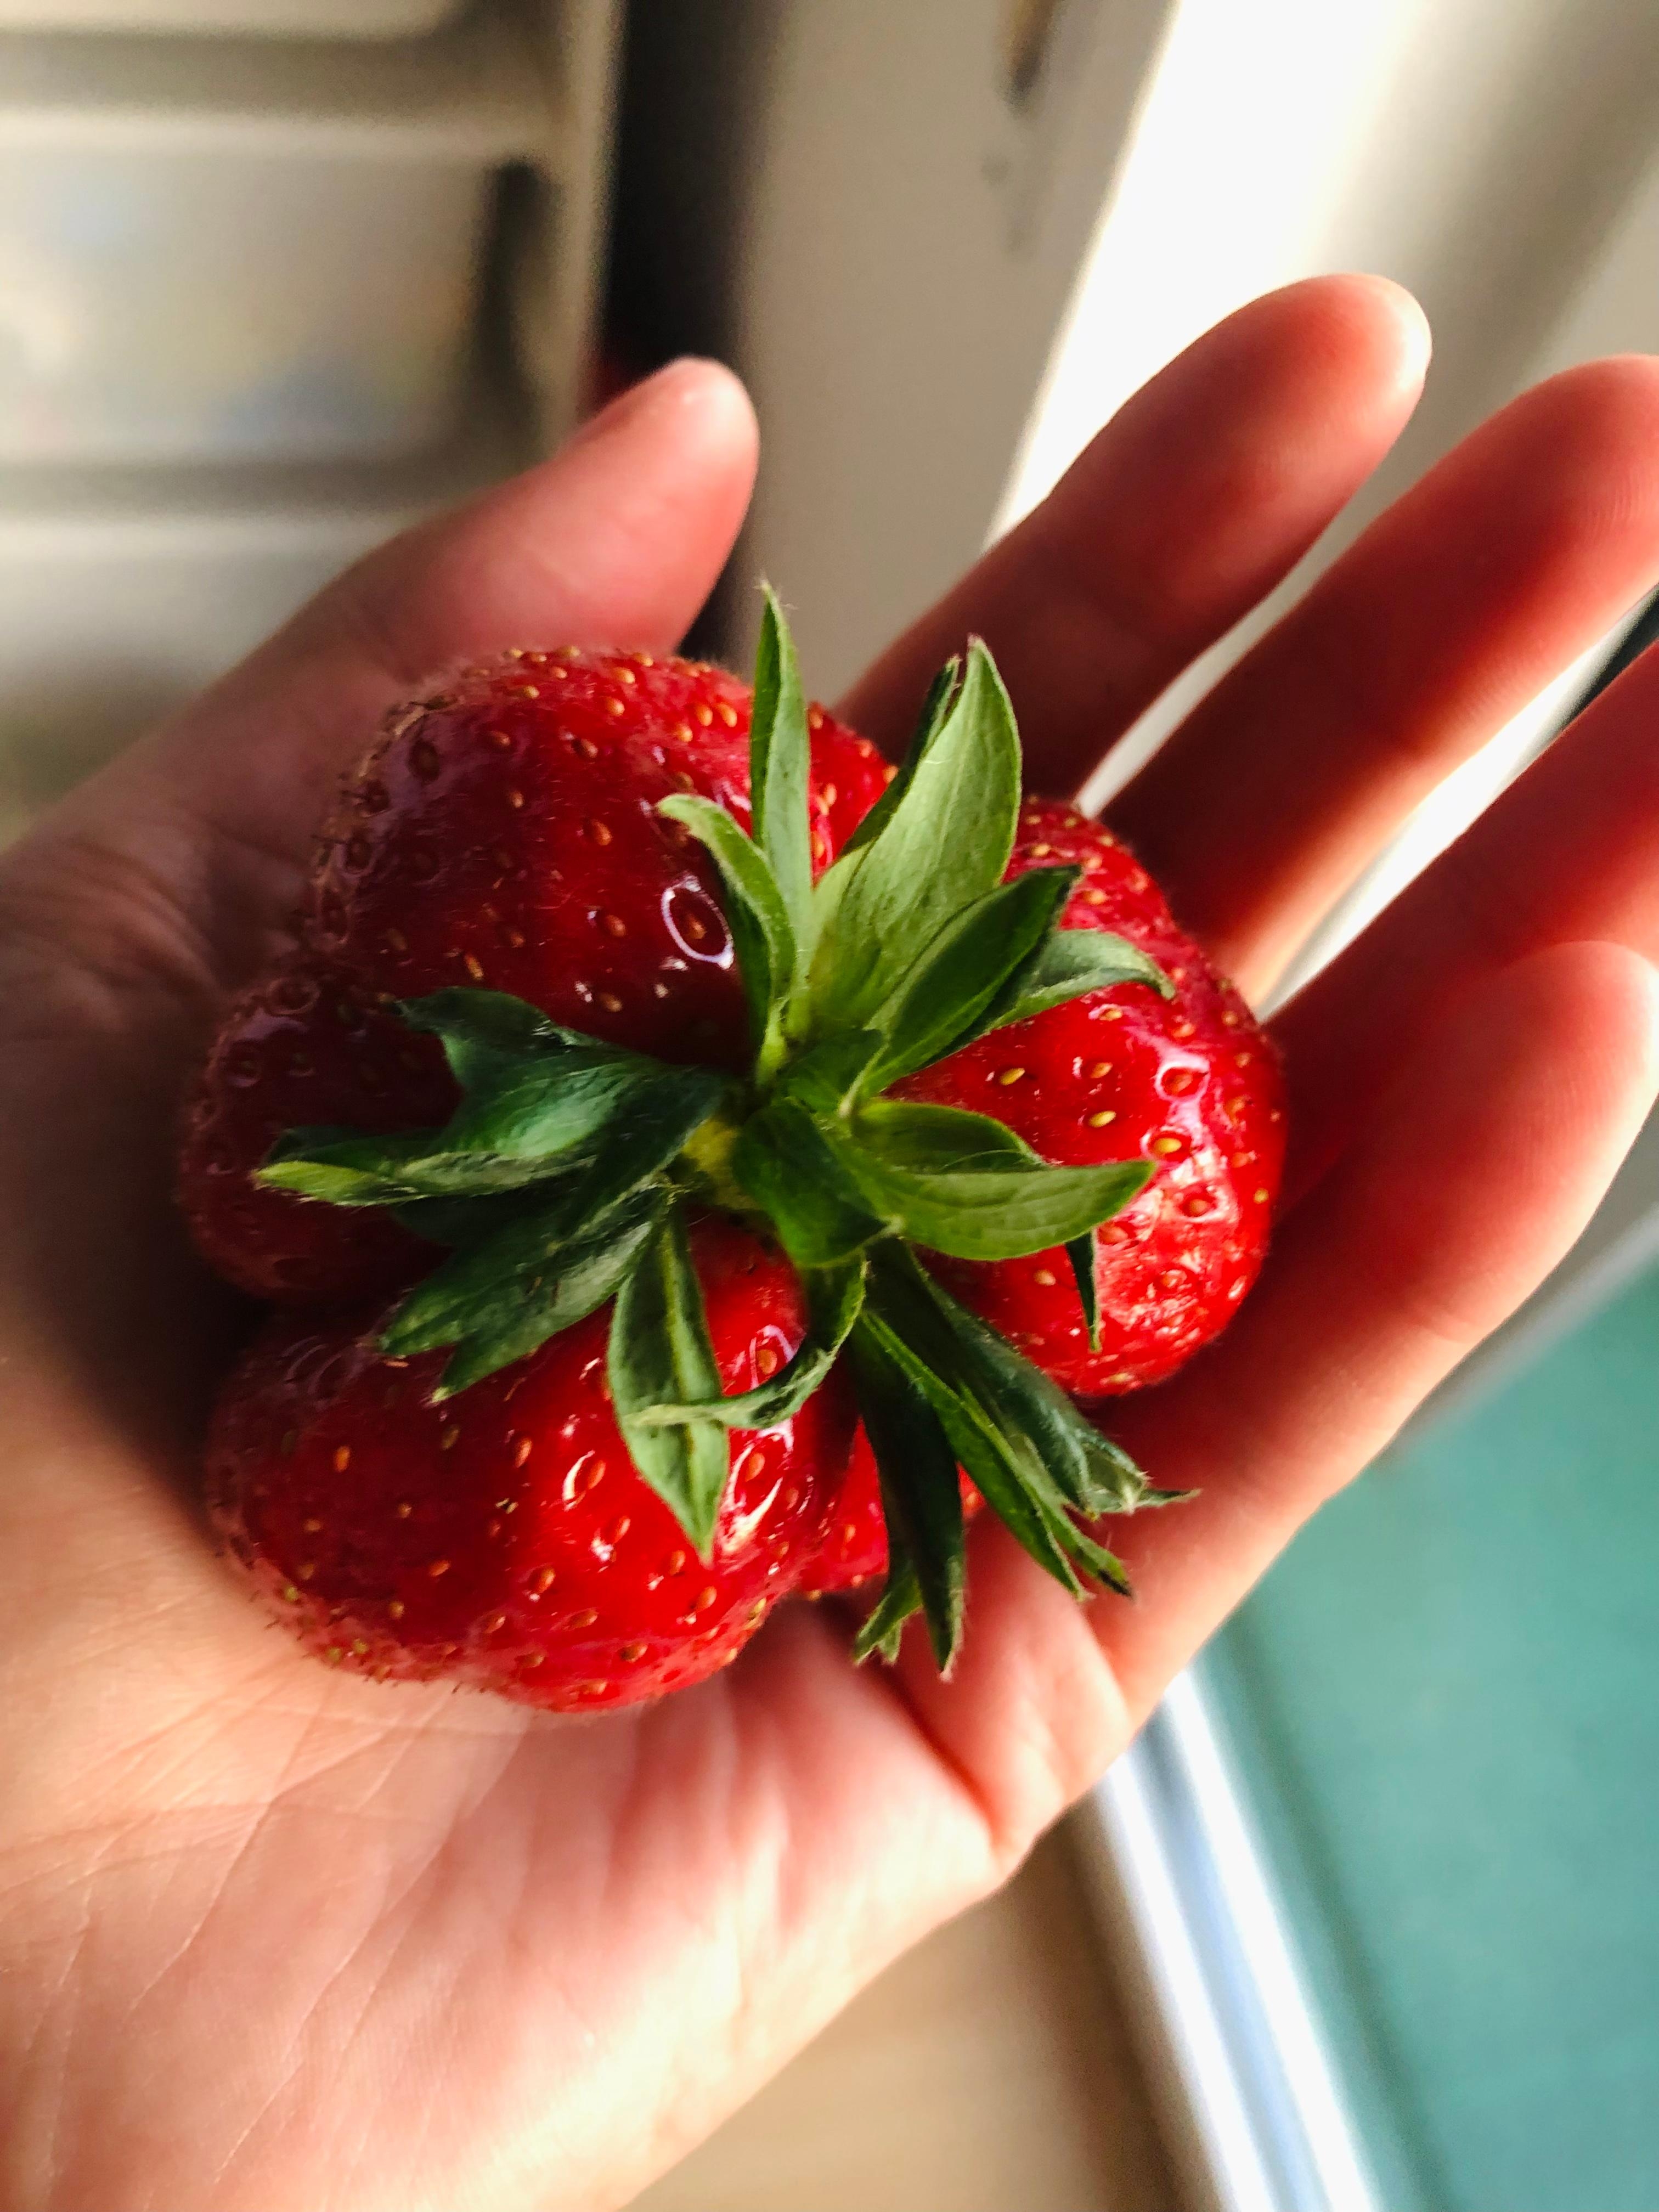 Erdbeere oder Fleischtomate 🫣😅 #dickedinger #erdbeersaison